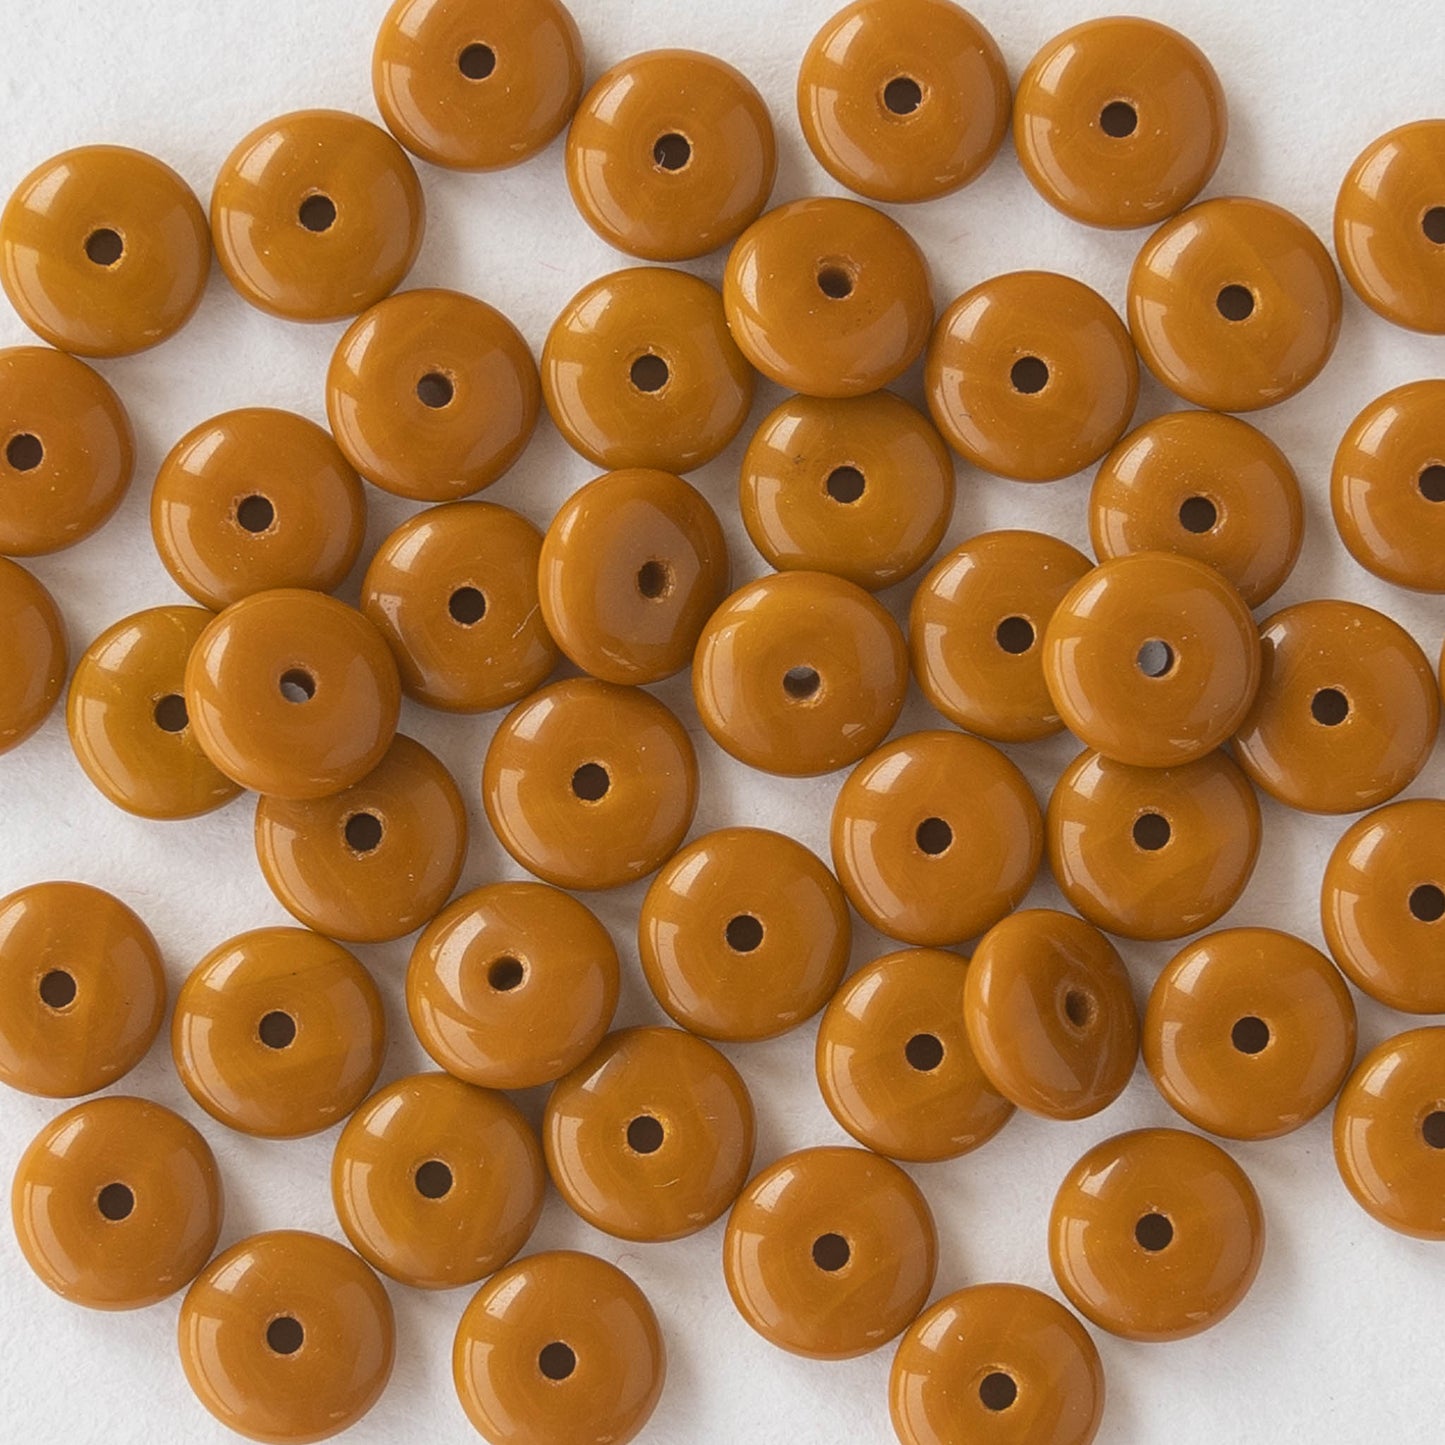 6mm Rondelle Beads - Opaque Ochre - 50 Beads